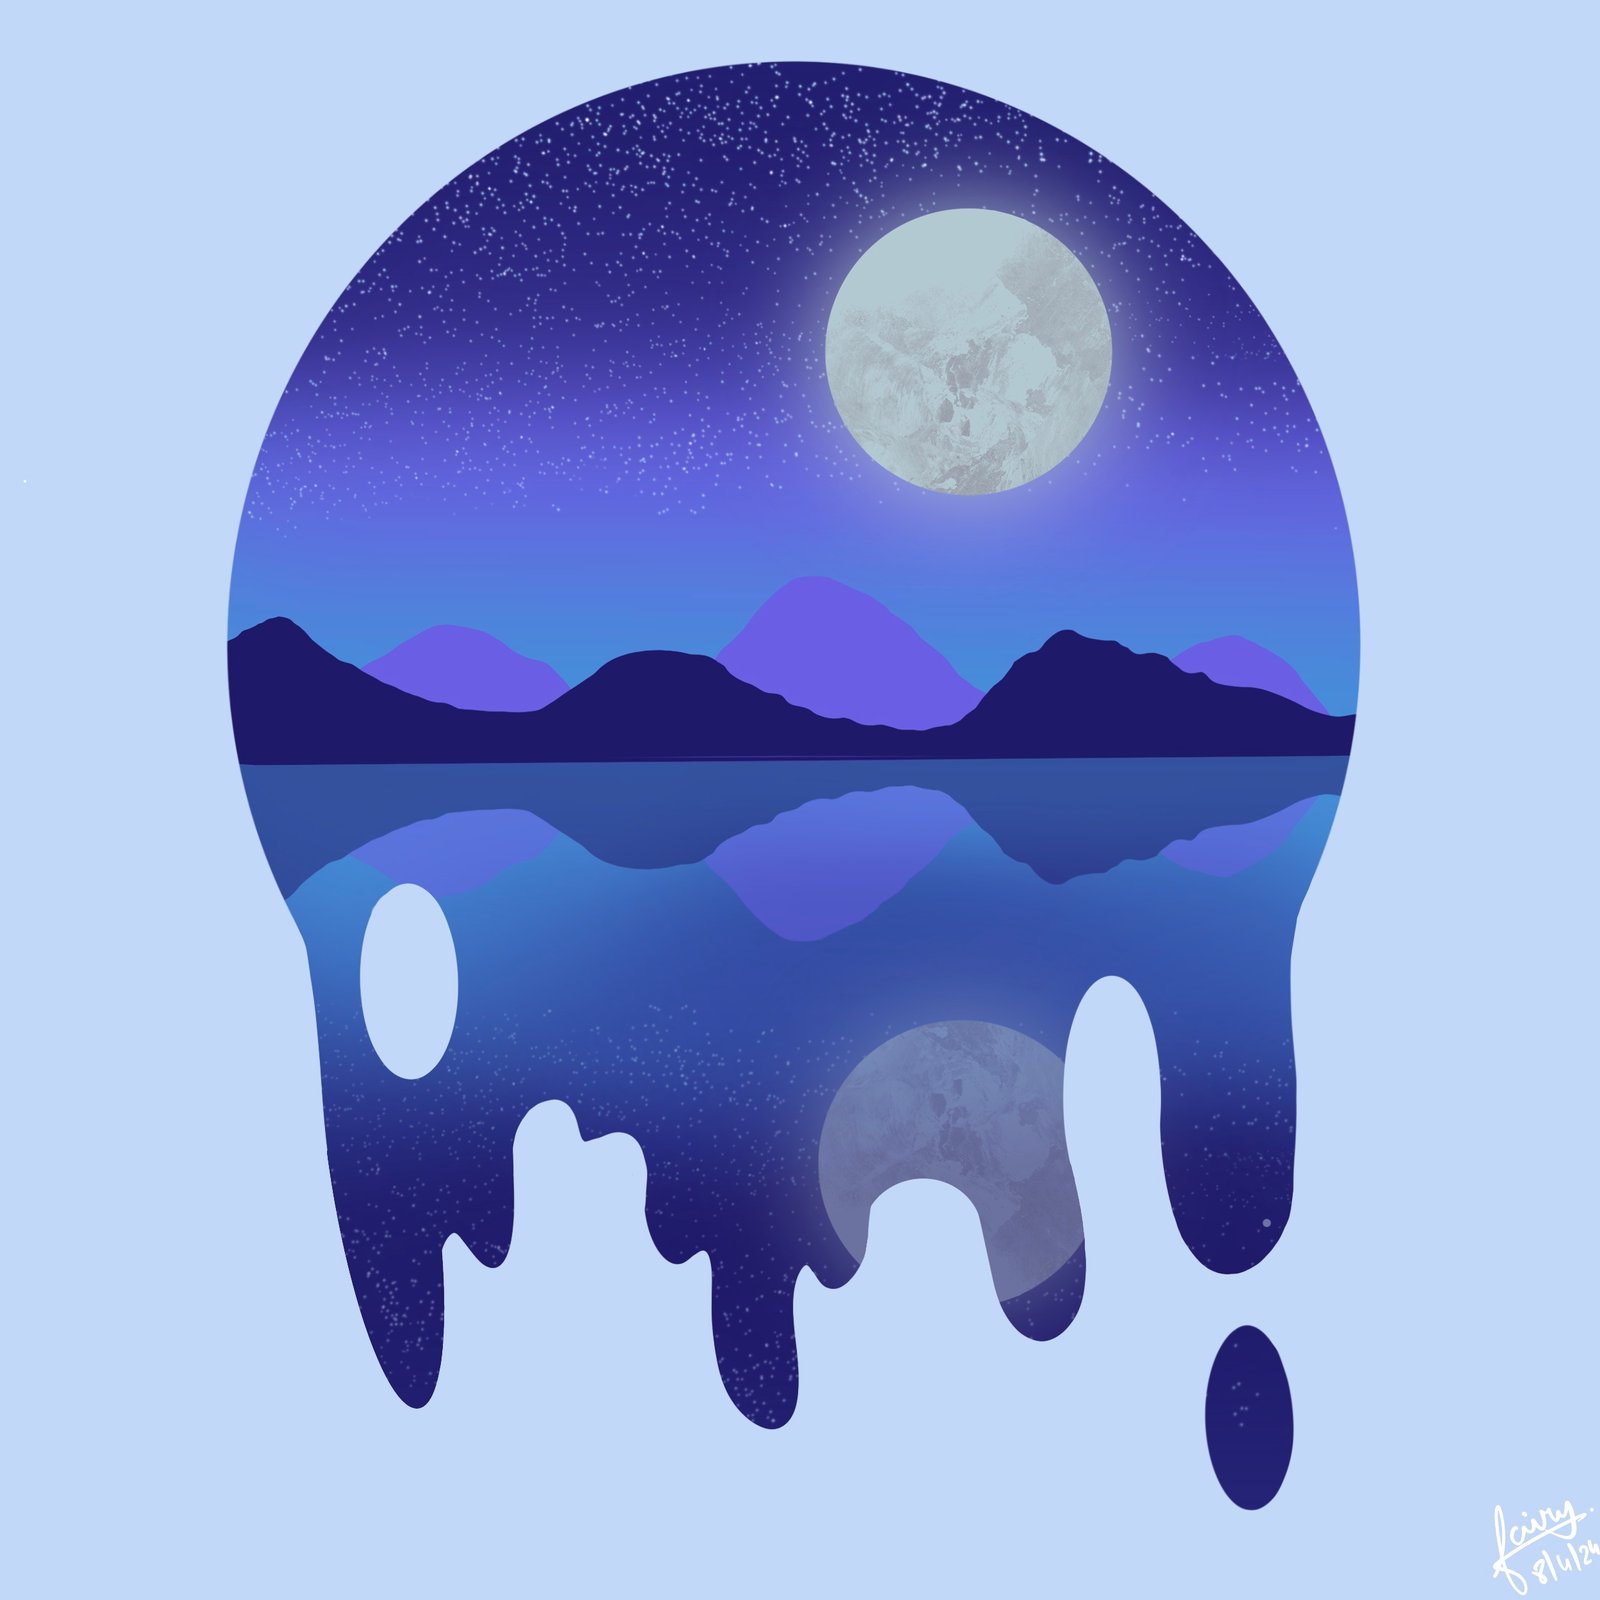 Moonlight Reflection